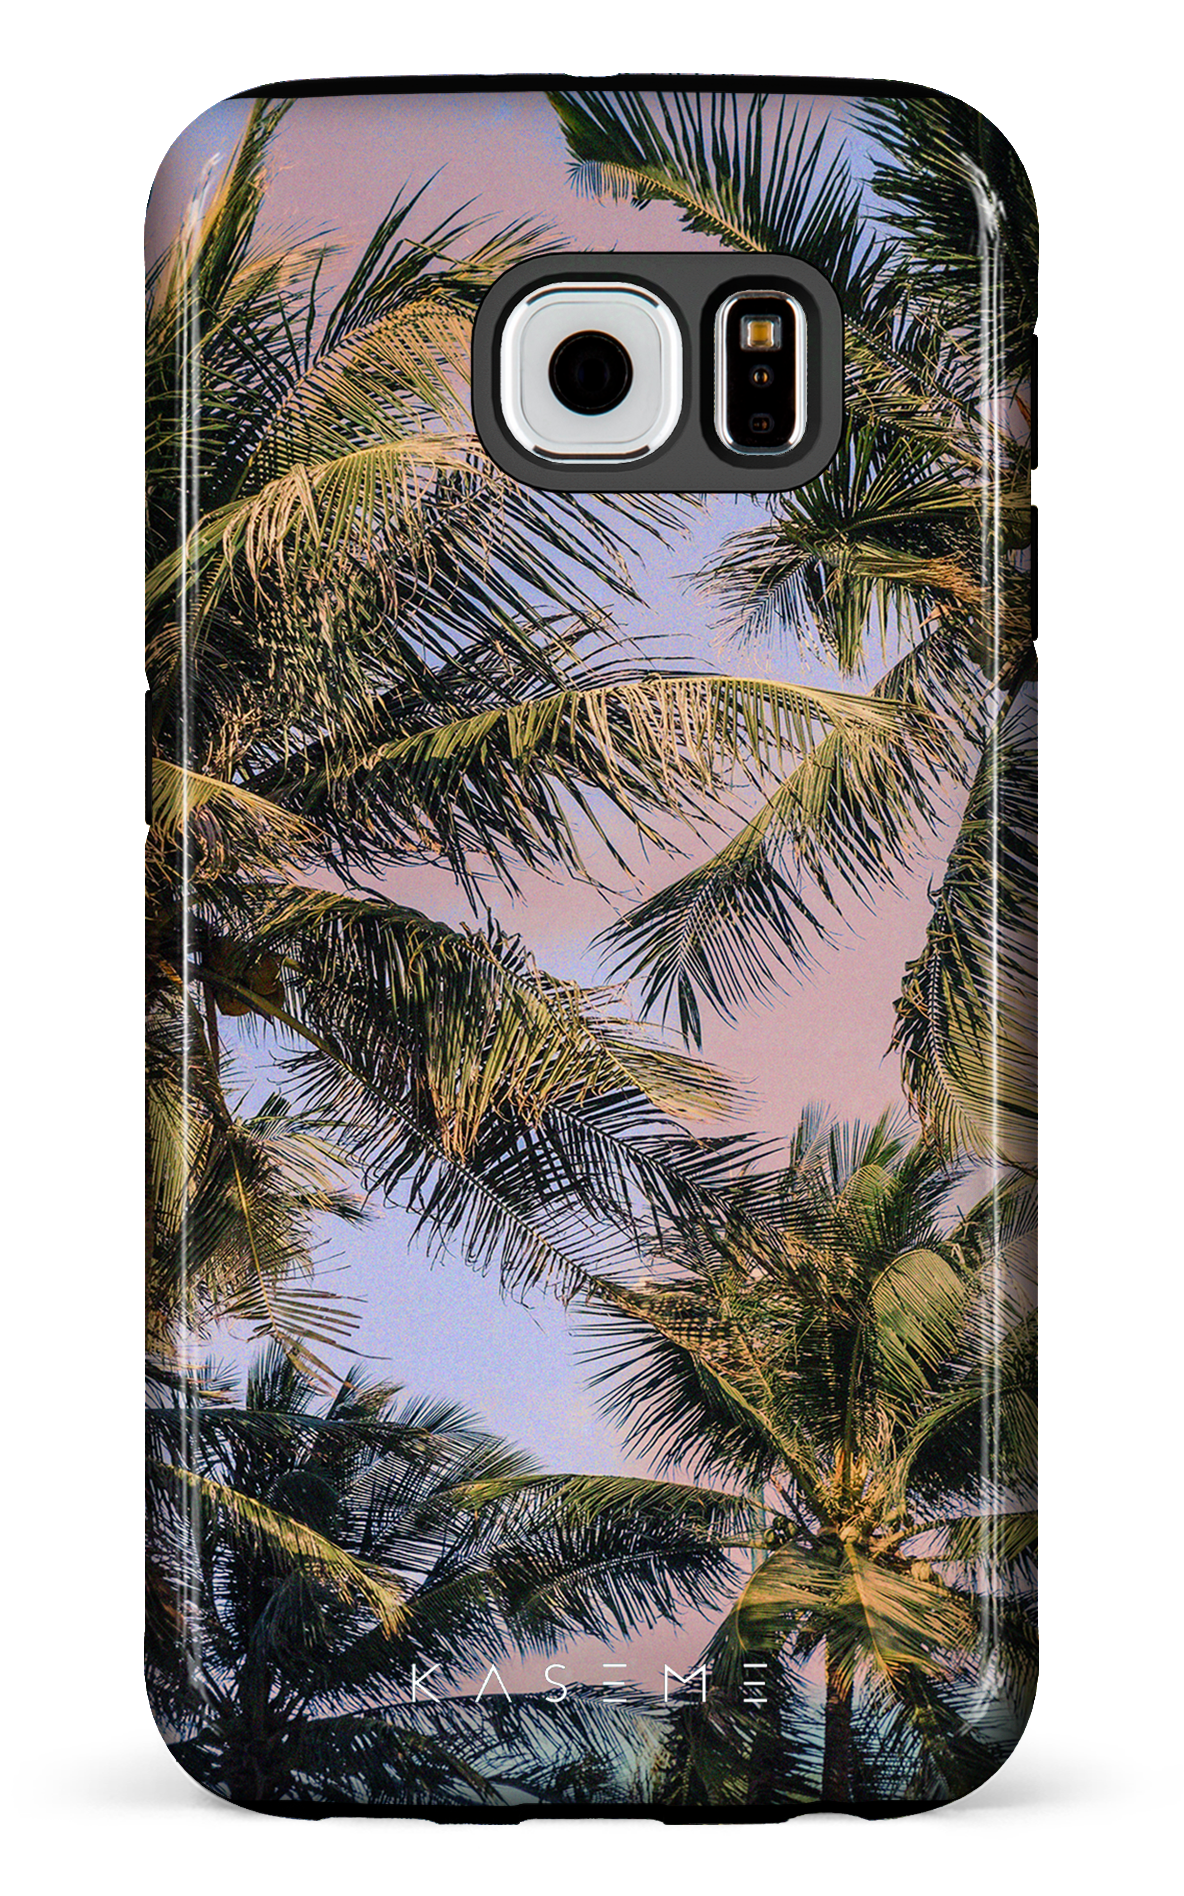 Malibu - Galaxy S6